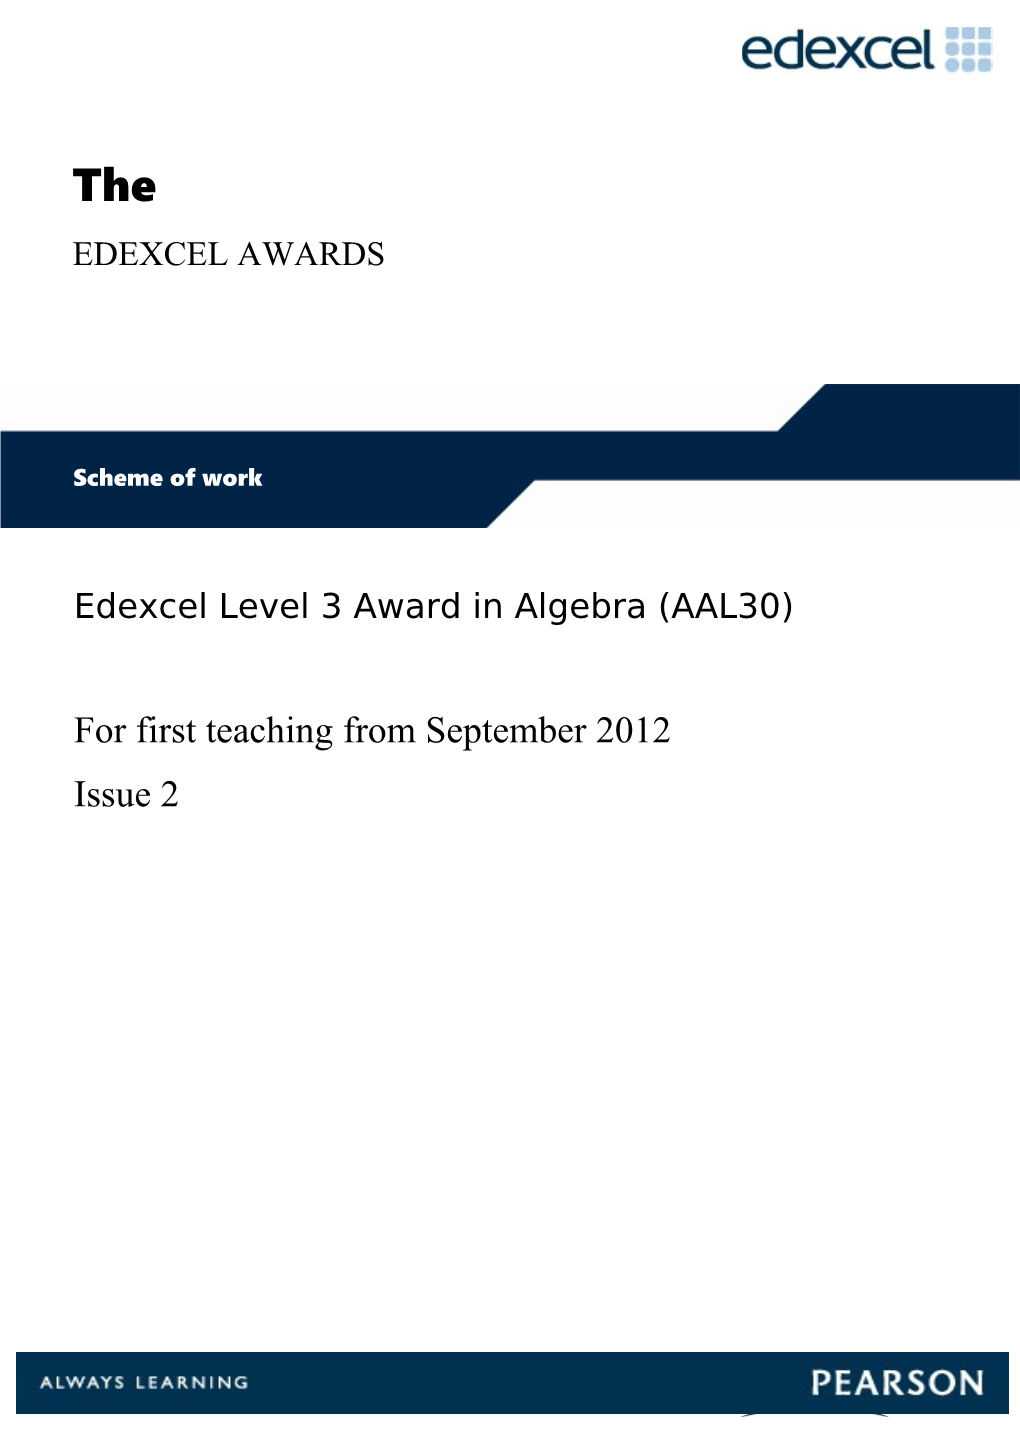 Scheme of Work - Level 2 Award and Level 3 Award in Algebra - Word Version